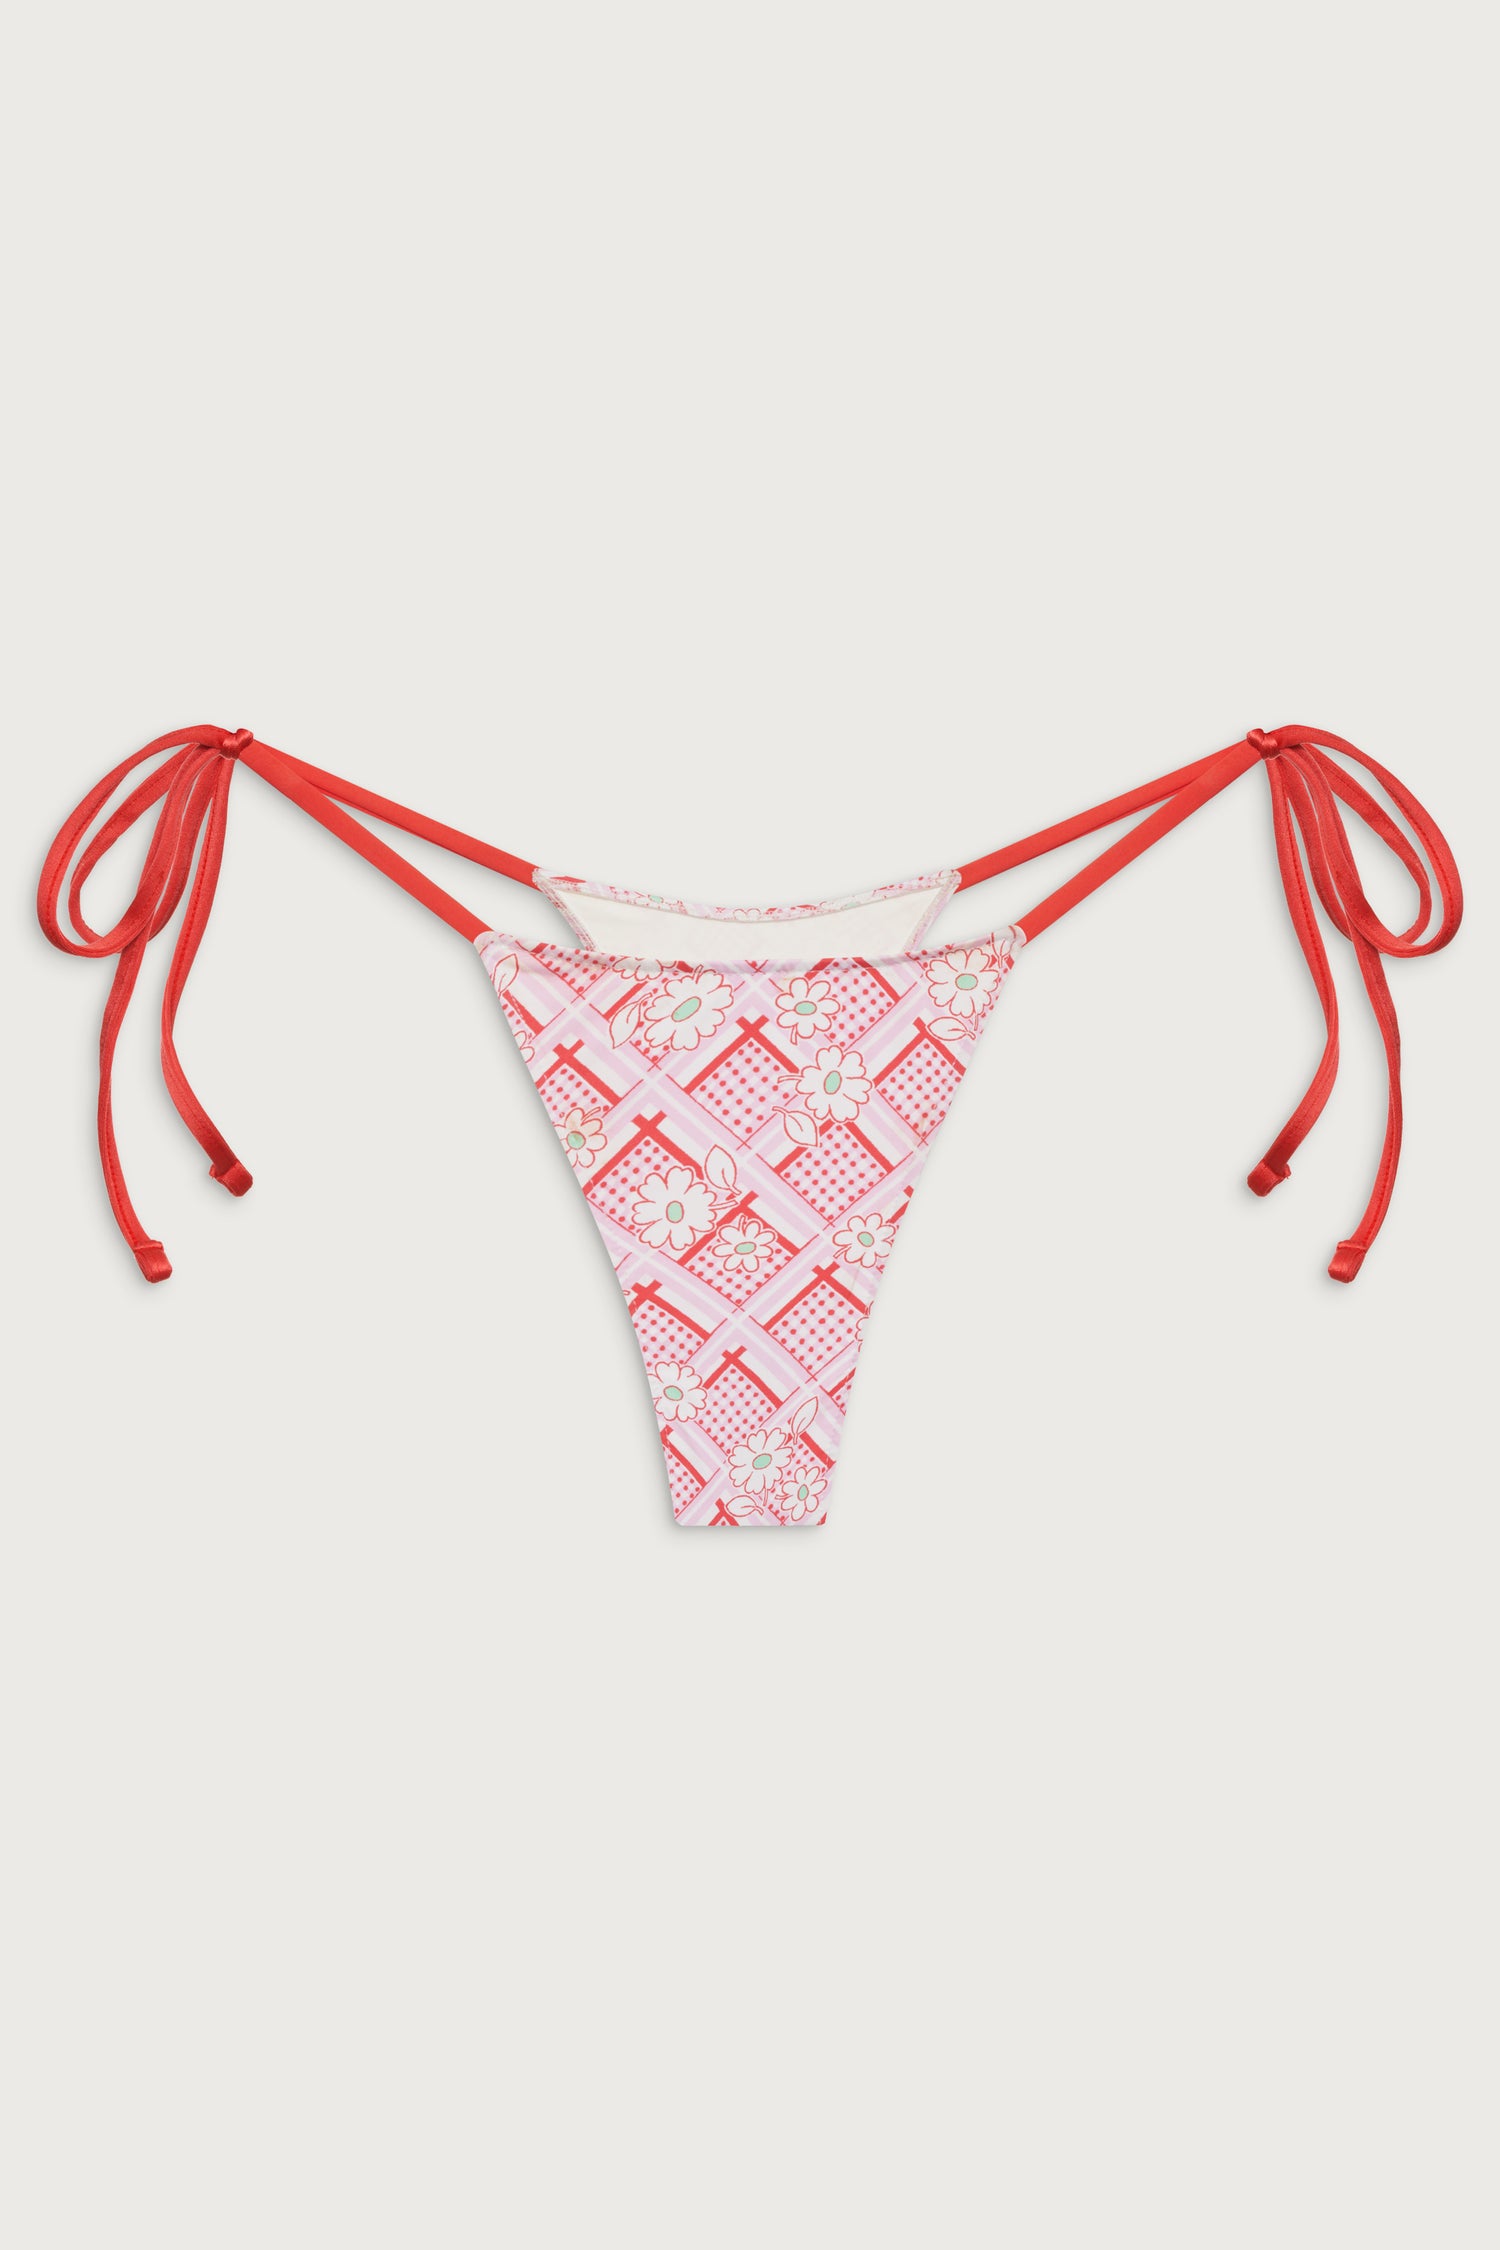 Divine Skimpy Floral Bikini Bottom - Red Rover